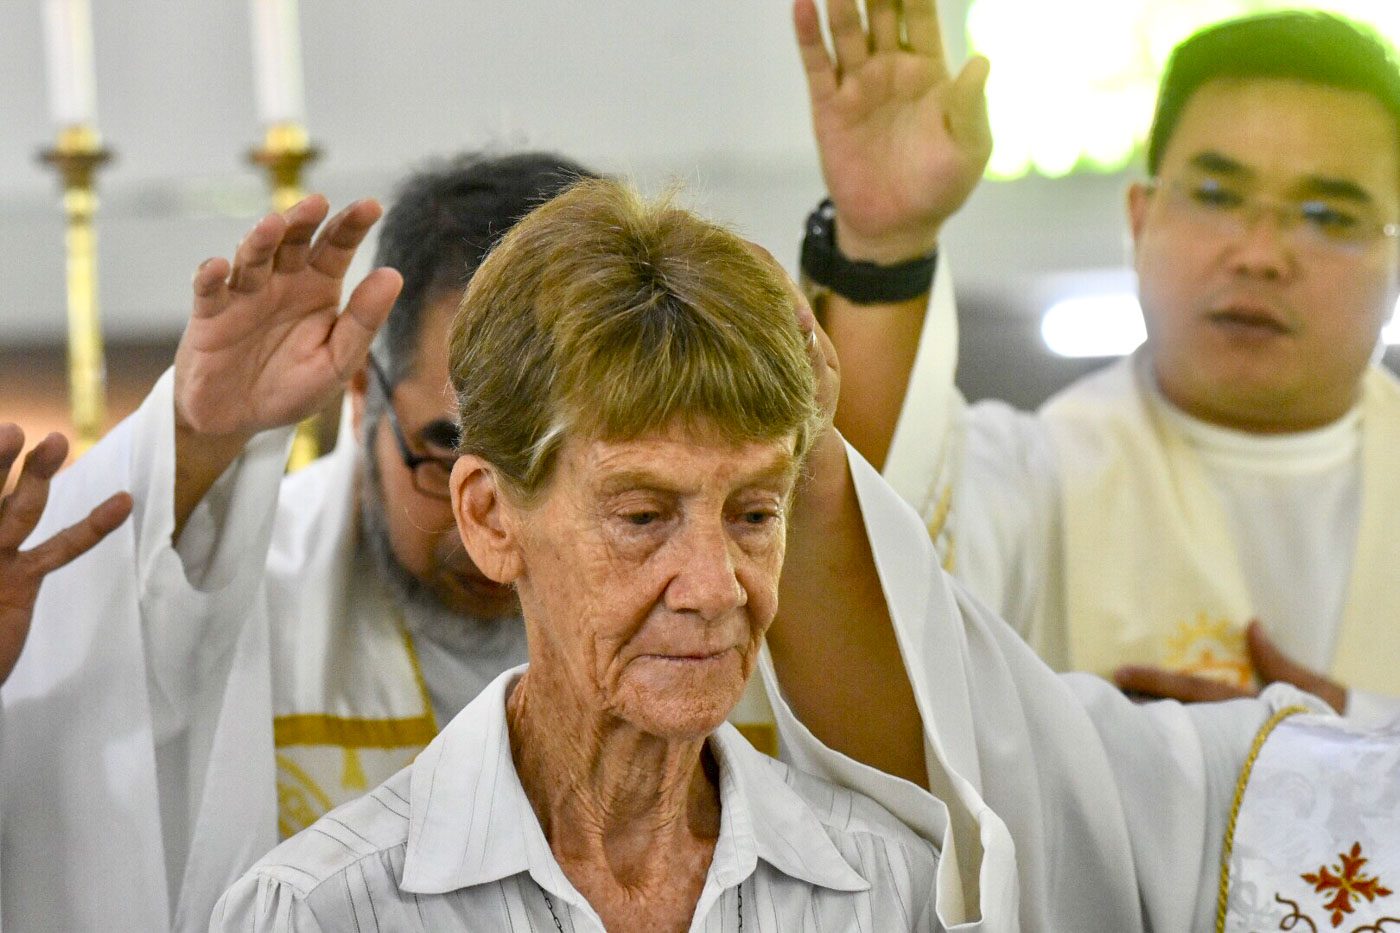 Appeal denied: PH orders Australian nun Patricia Fox to leave